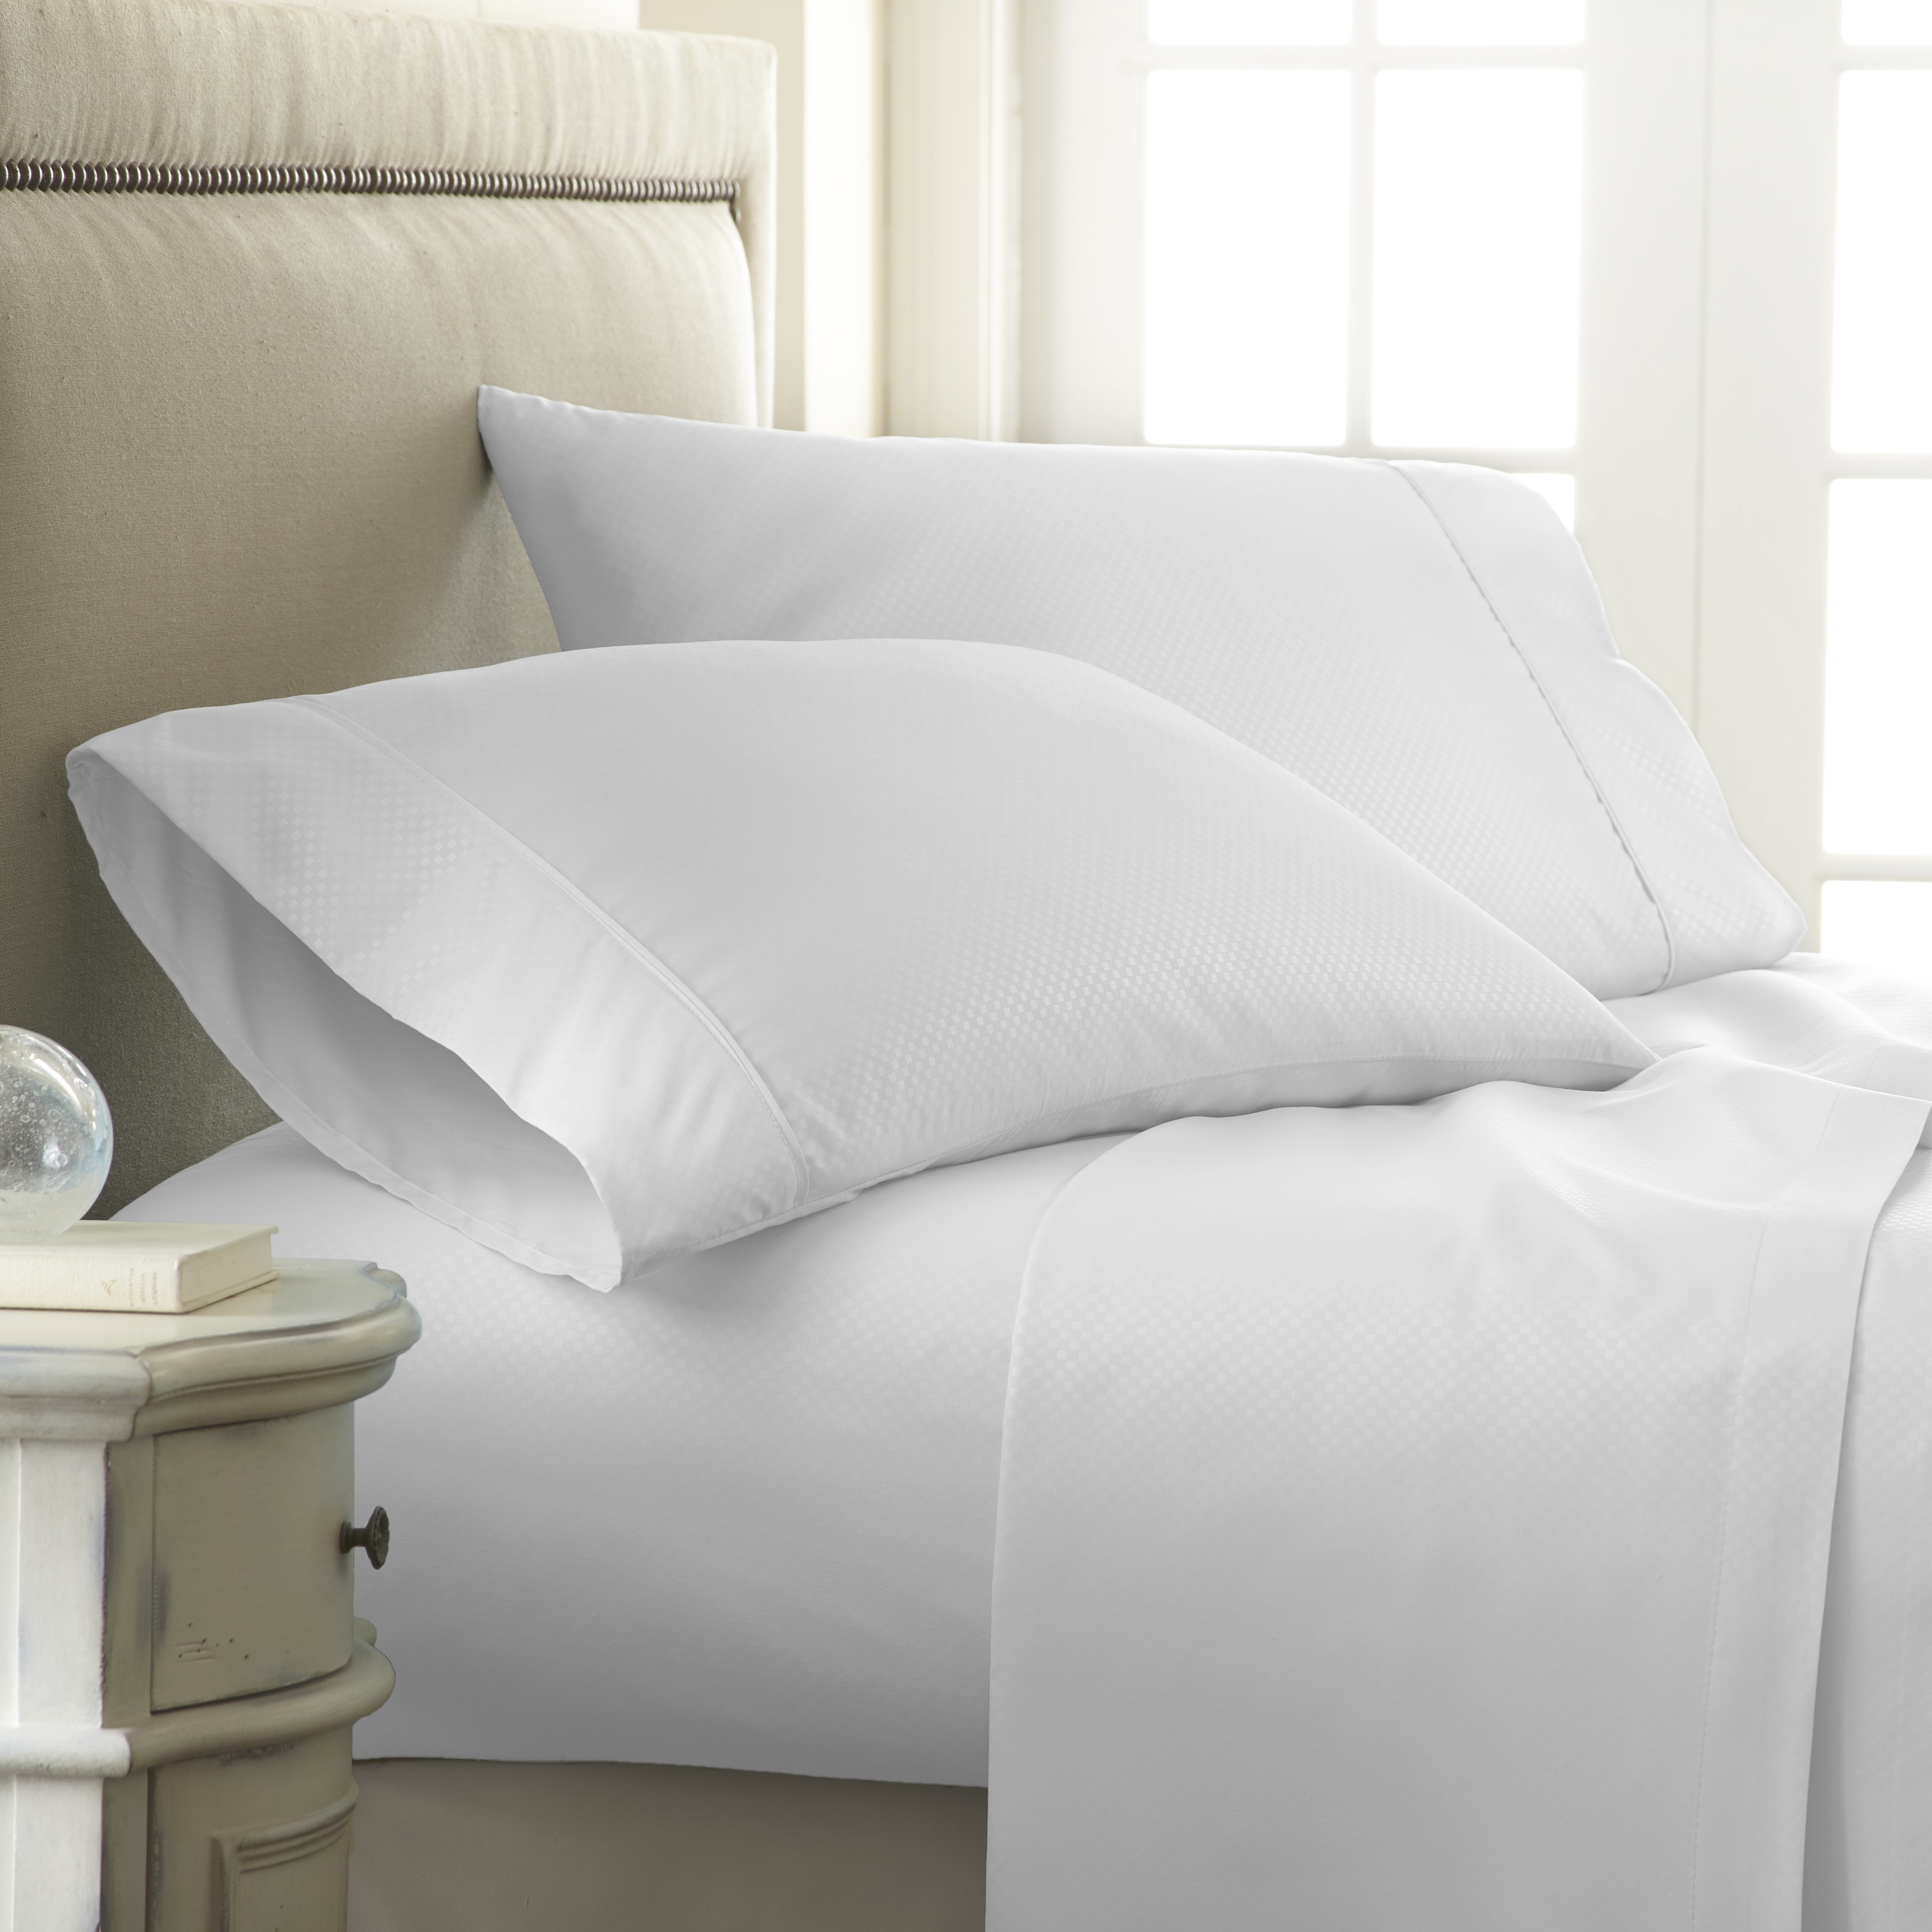 ienjoy Home Premium Ultra Soft Checkered Design 4 Piece Bed Sheet Set